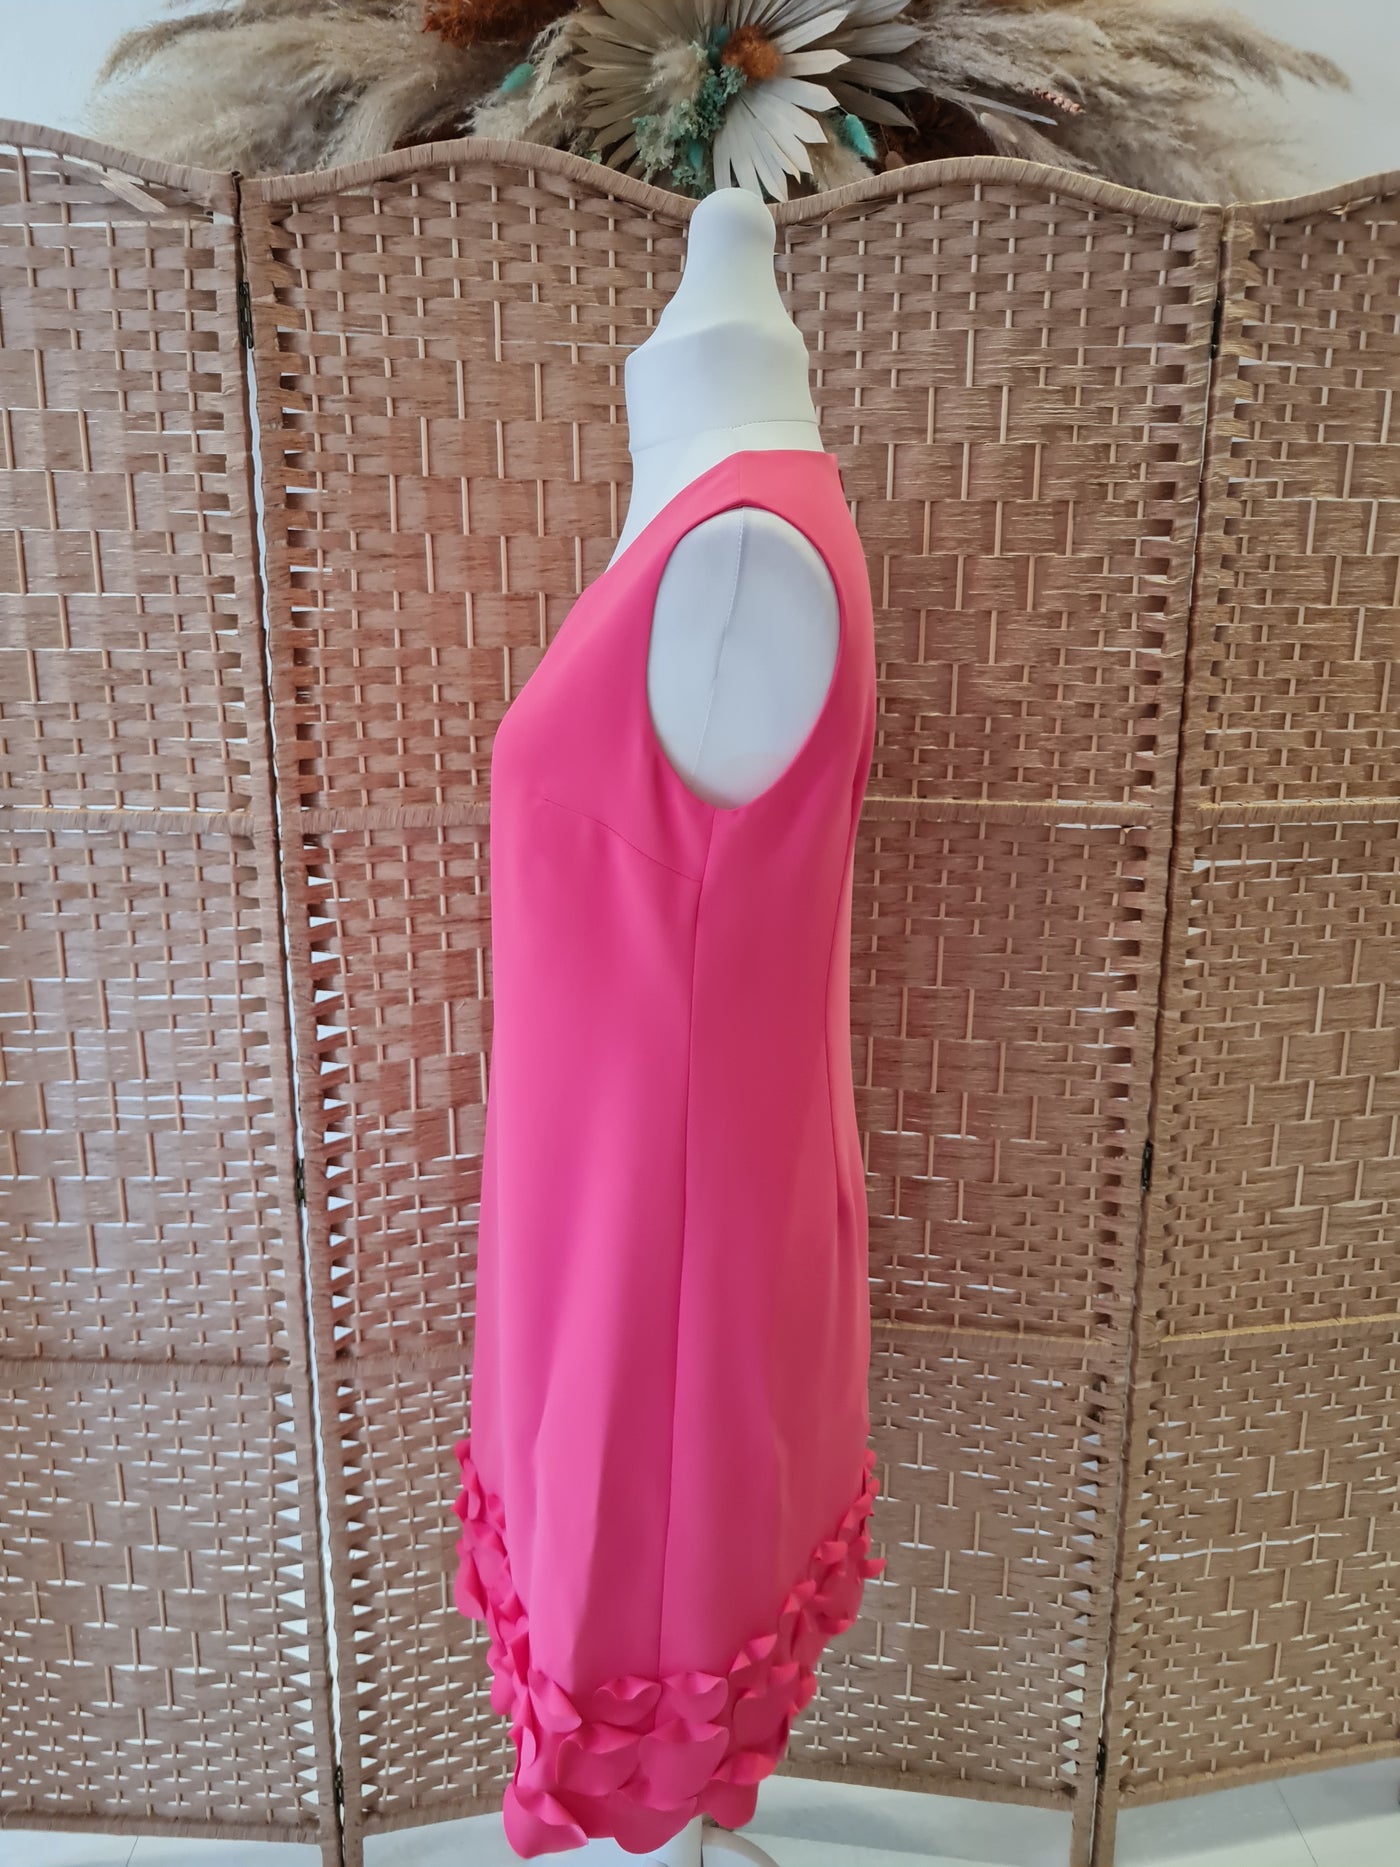 Daisy May Pink Dress & overlay Back fasten Jacket 14